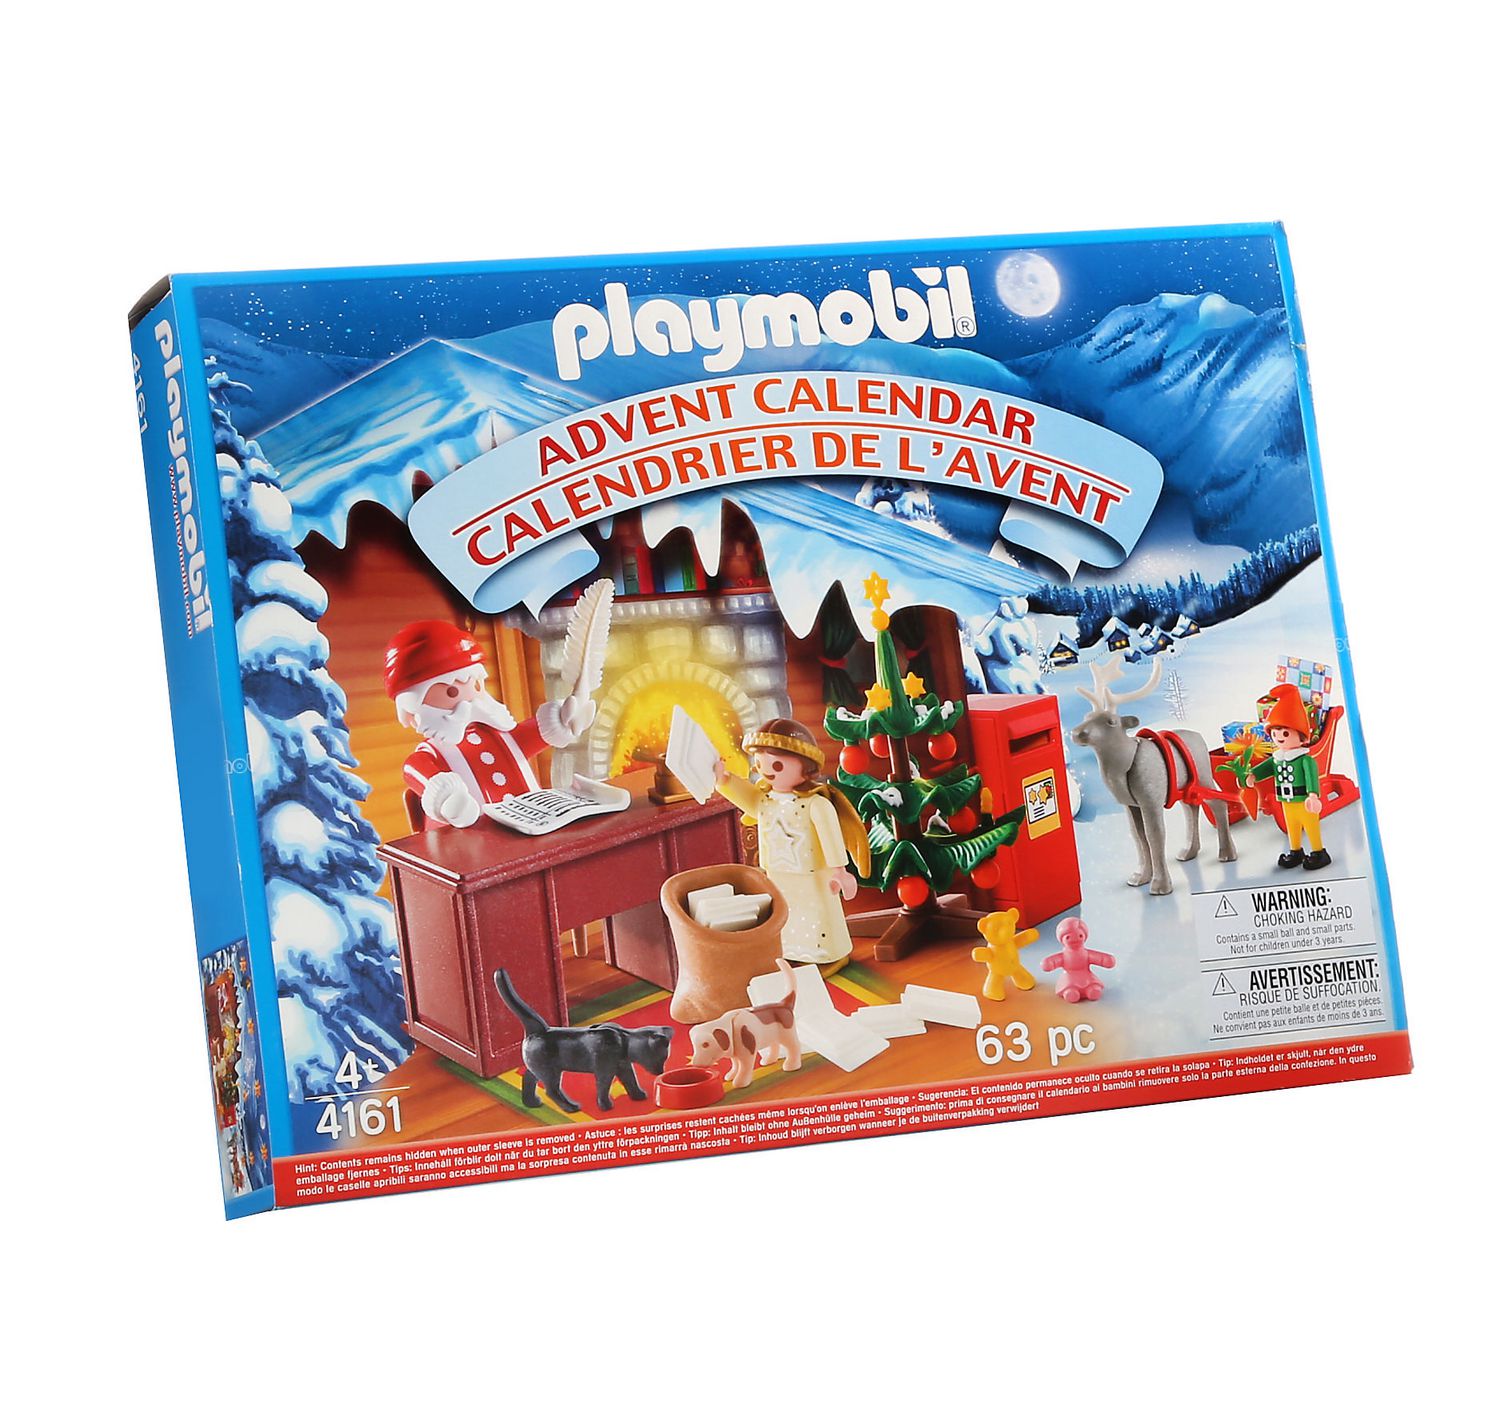 Playmobil Advent Calendar 4161 Play Set Walmart Canada